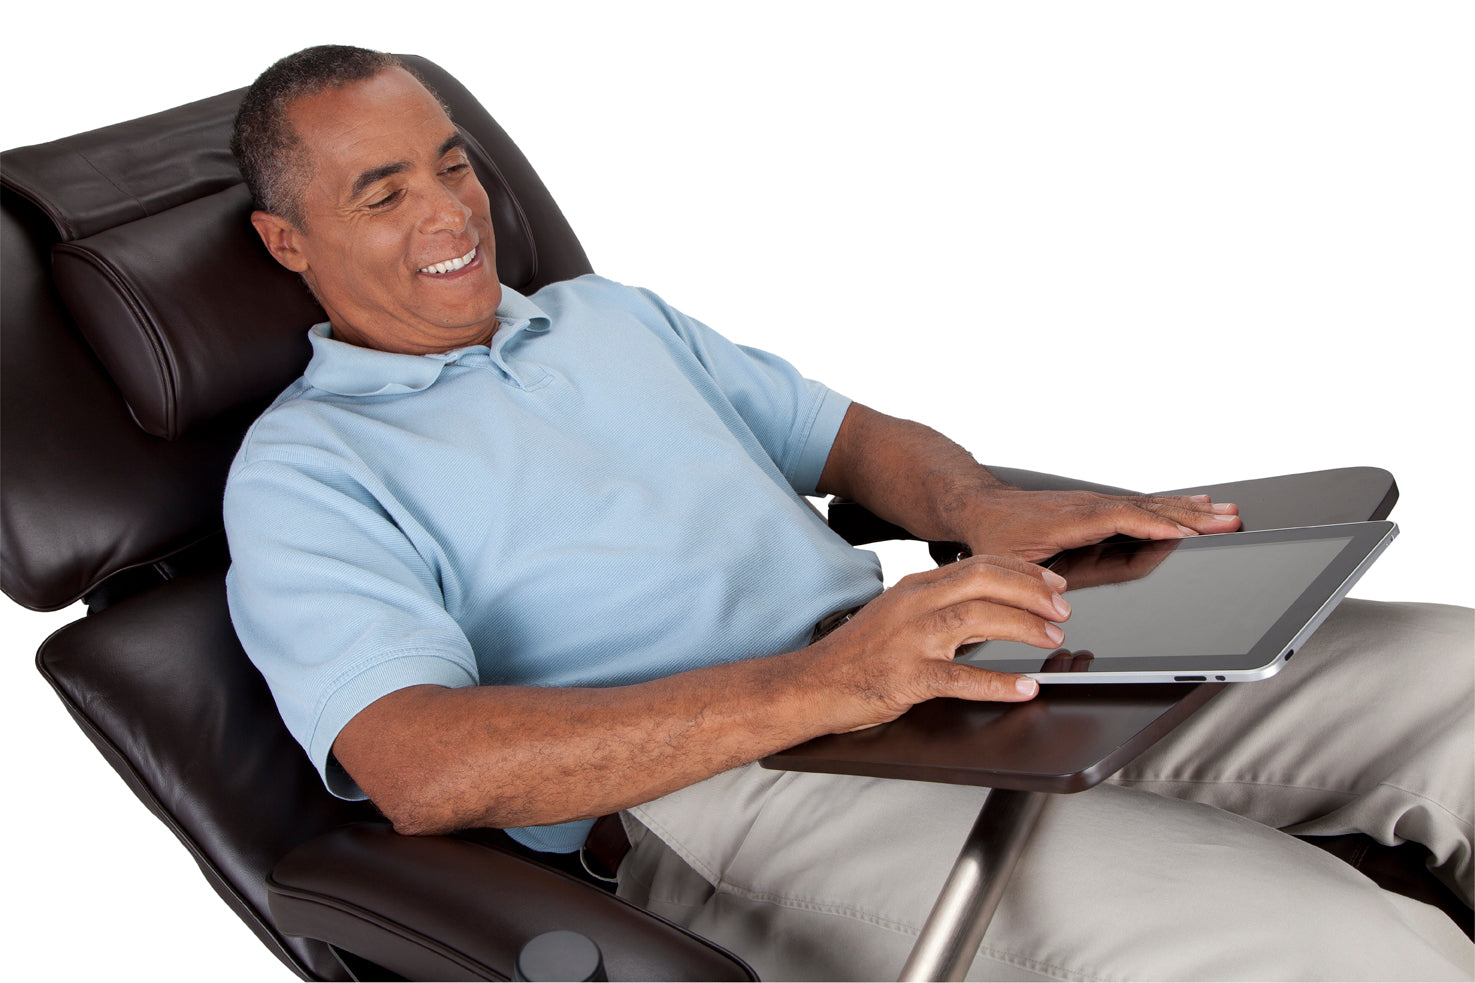 Superb Massage Tables Human Touch Perfect Chair Laptop Desk